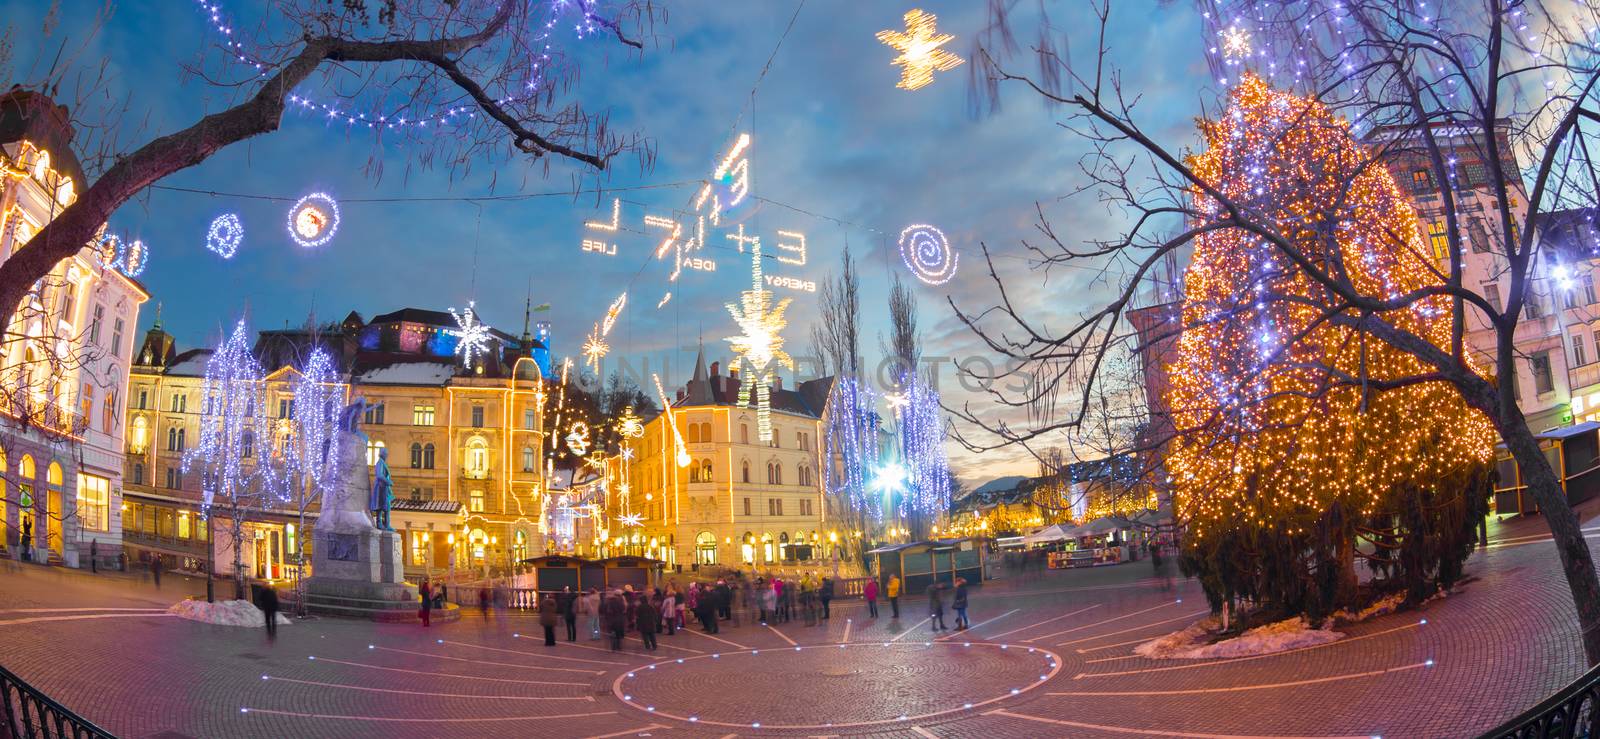 Ljubljana's city center decorated for Christmas. by kasto